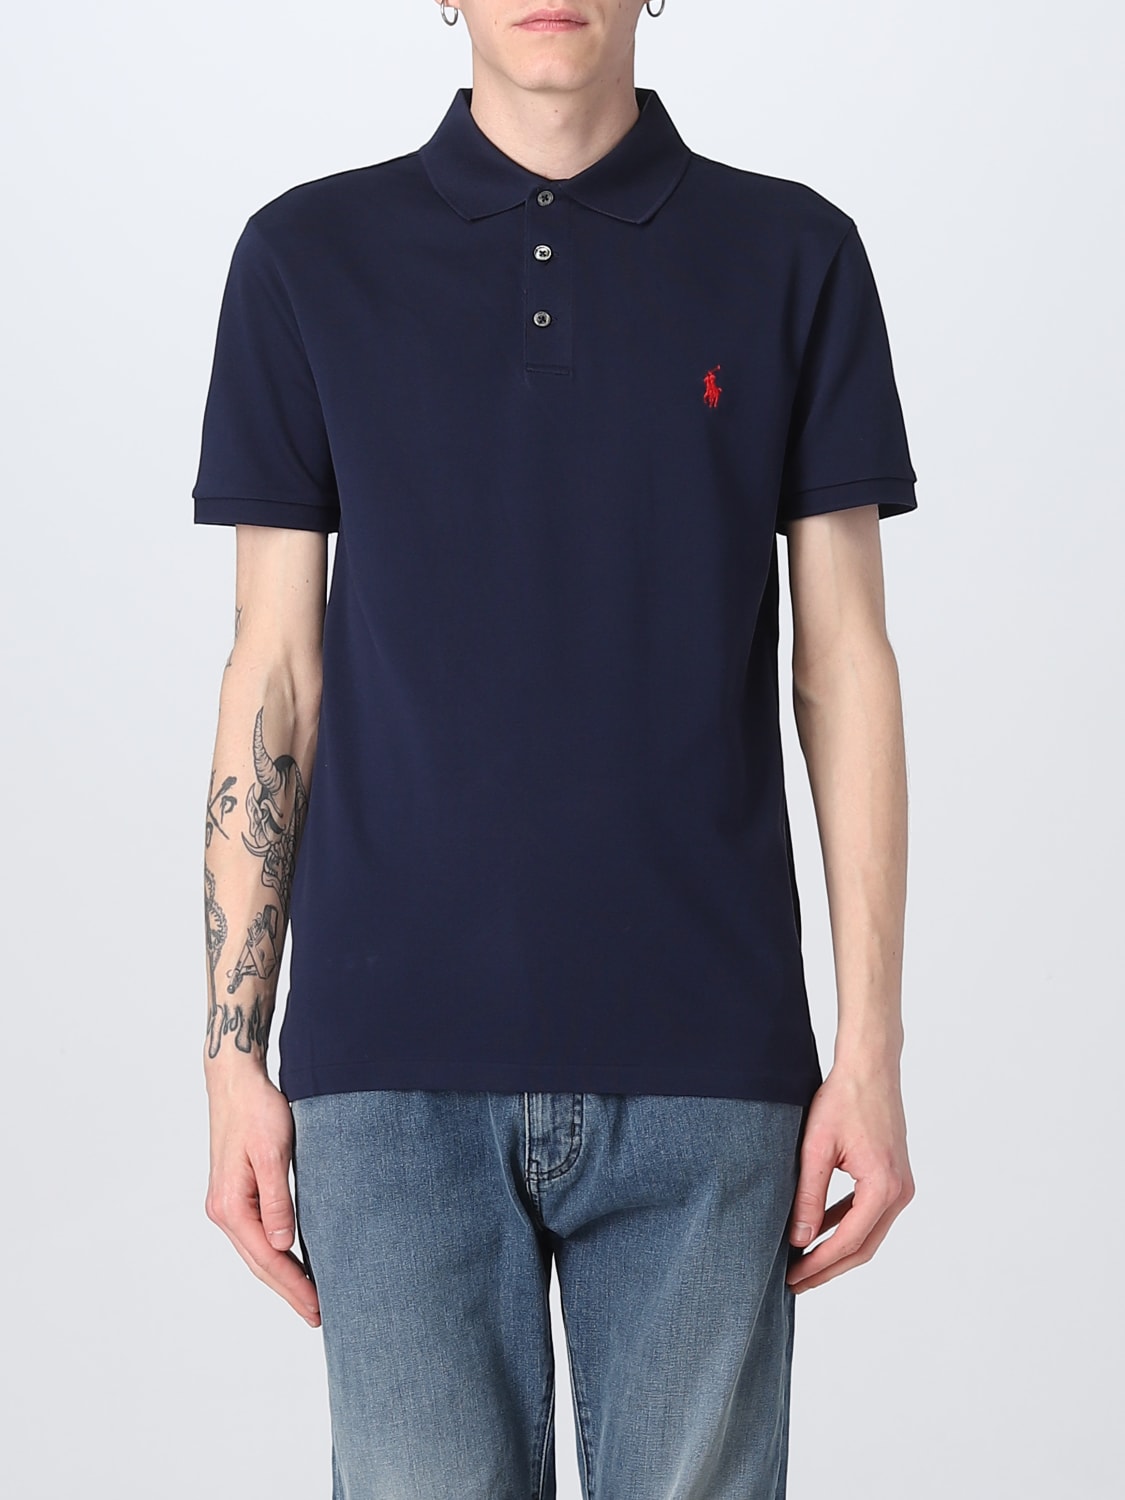 POLO LAUREN: shirt for man - Navy | Polo Ralph Lauren polo shirt 710541705 online on GIGLIO.COM